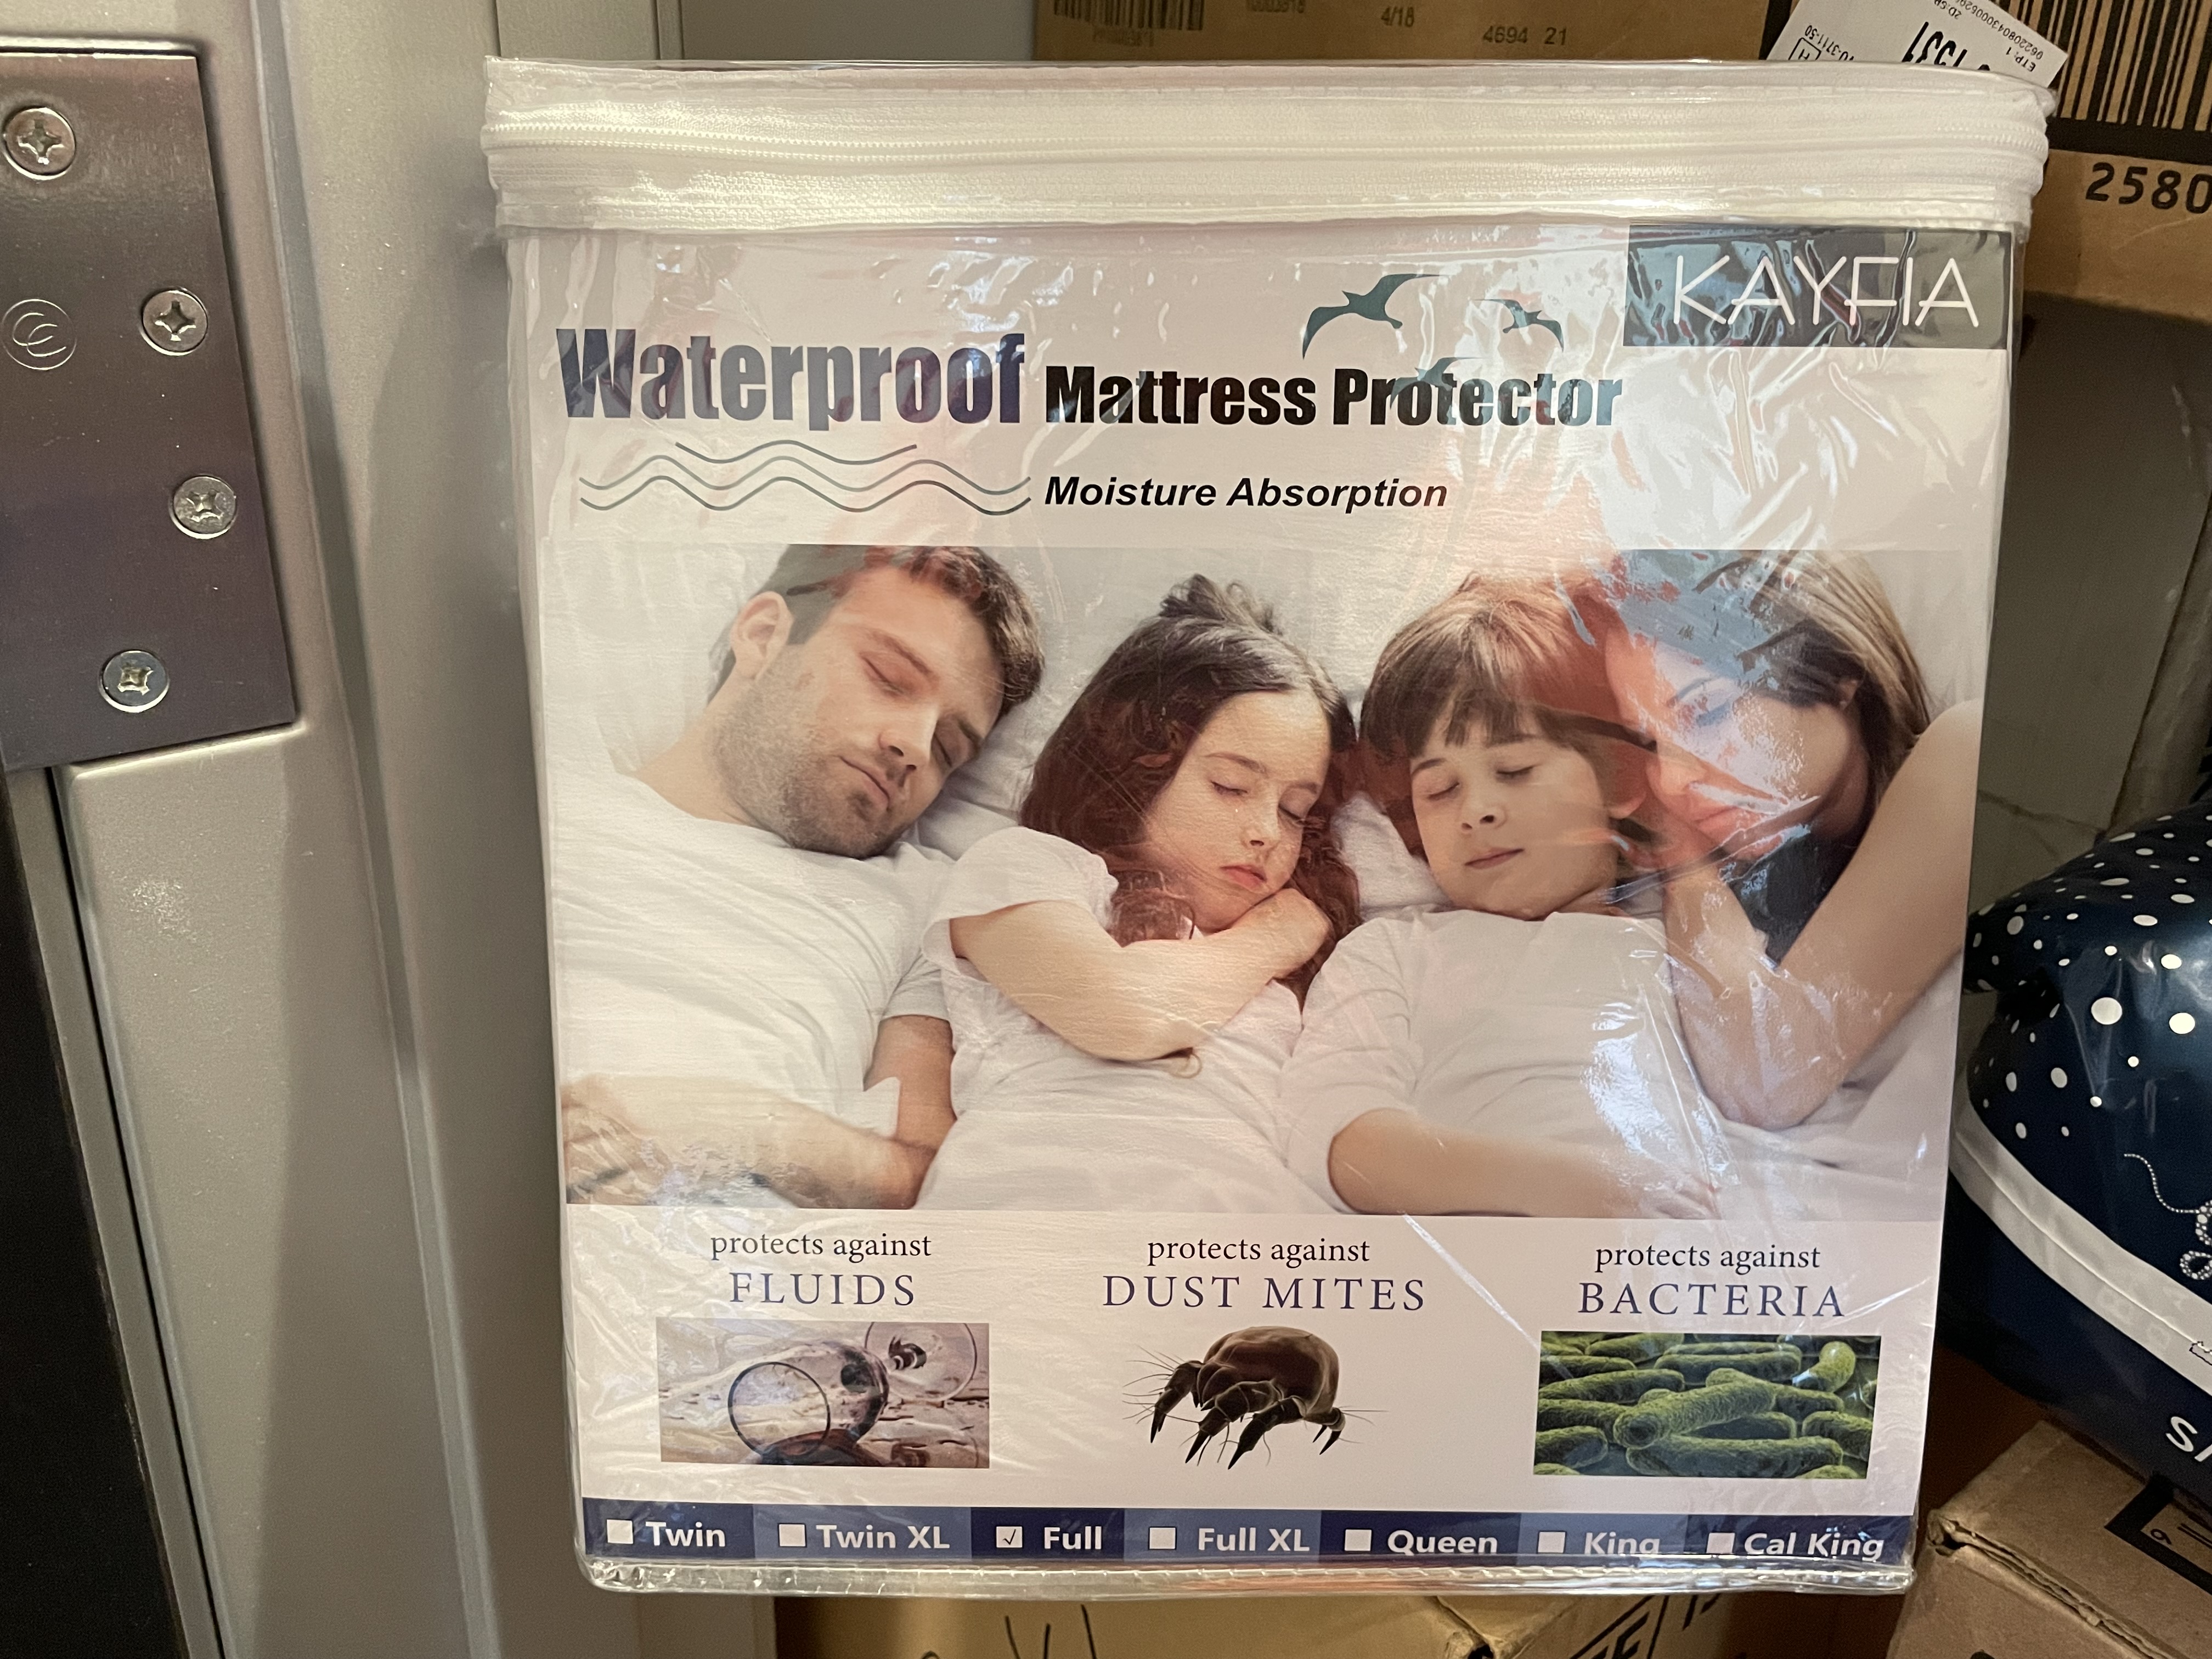 Full size mattress protector